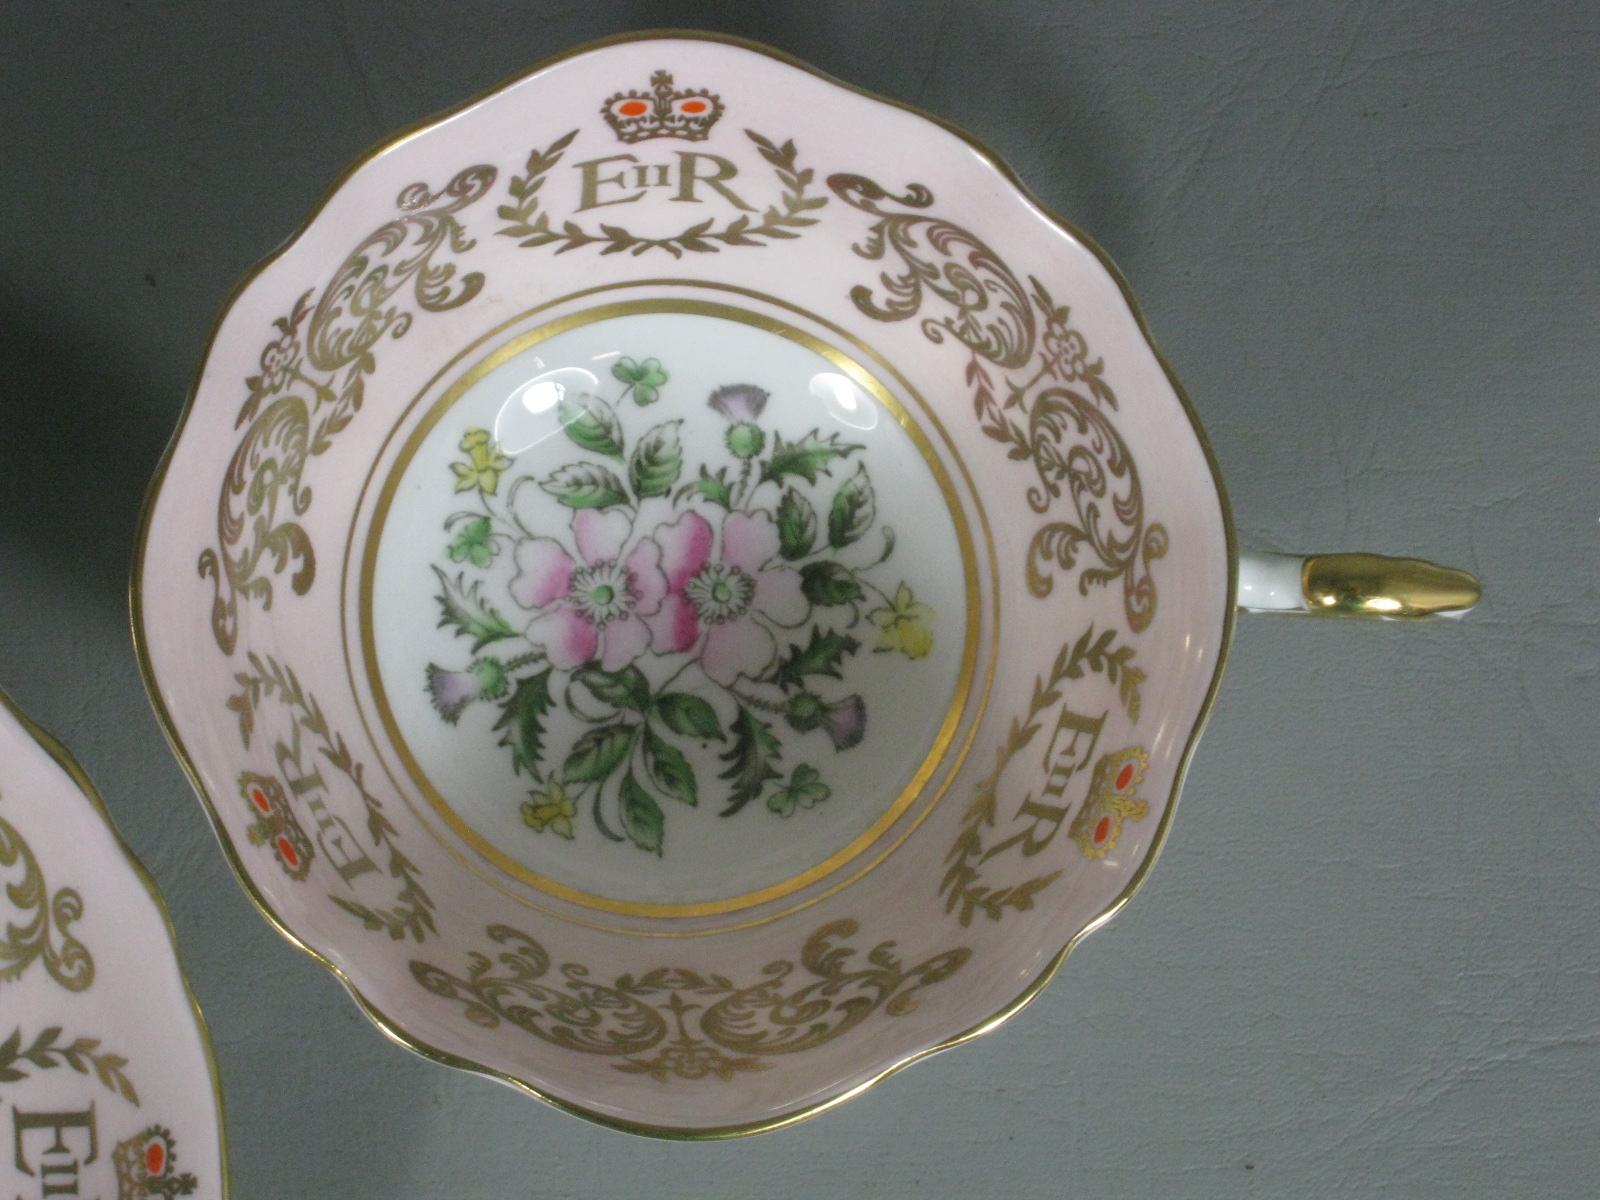 2 Paragon Bone China Queen Elizabeth II 1953 Coronation Tea Cups Teacups Saucers 5